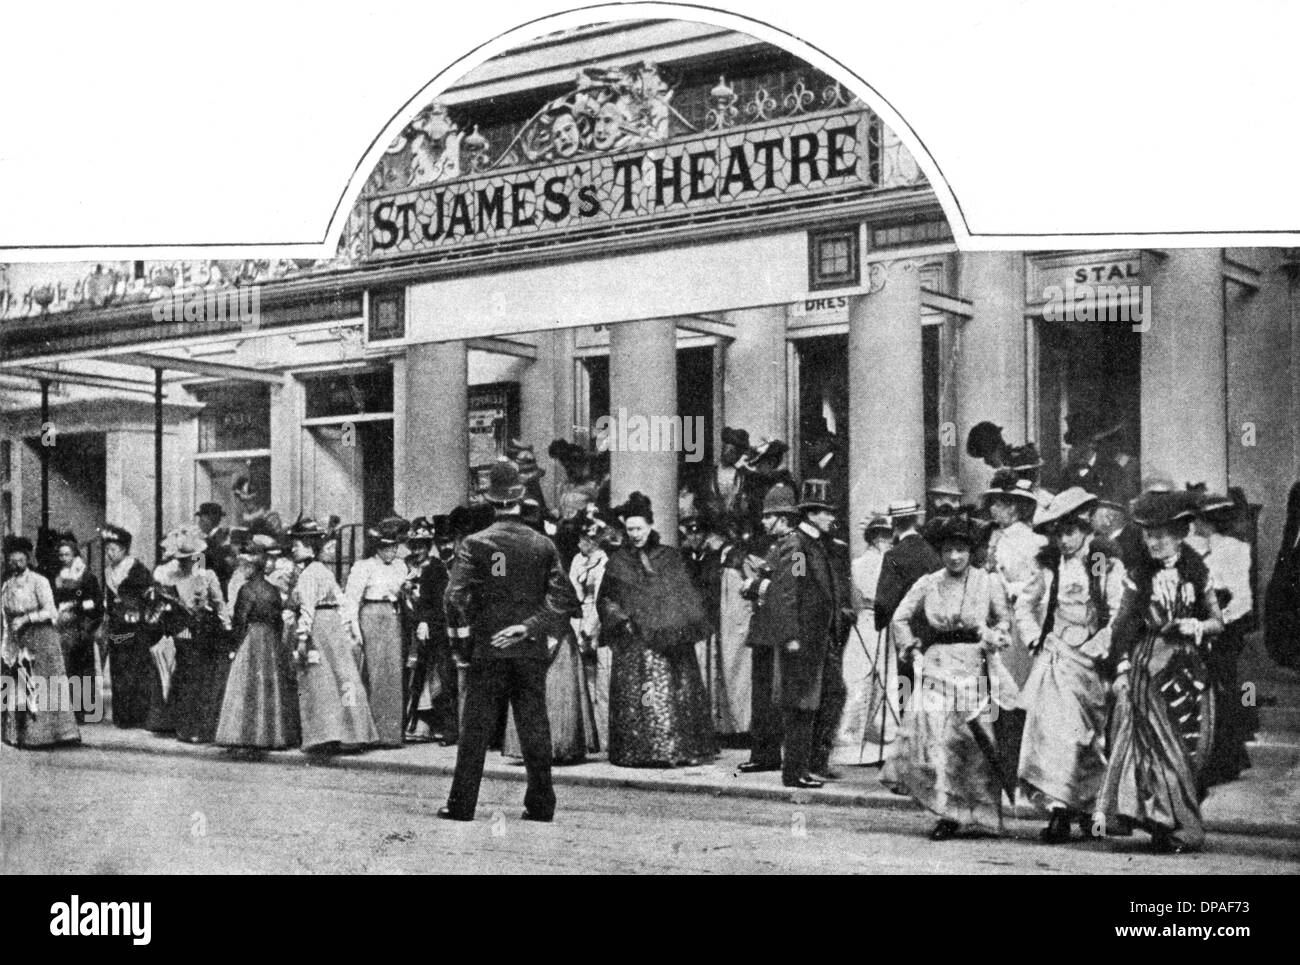 ST. JAMES THEATRE 1900 Stockfoto